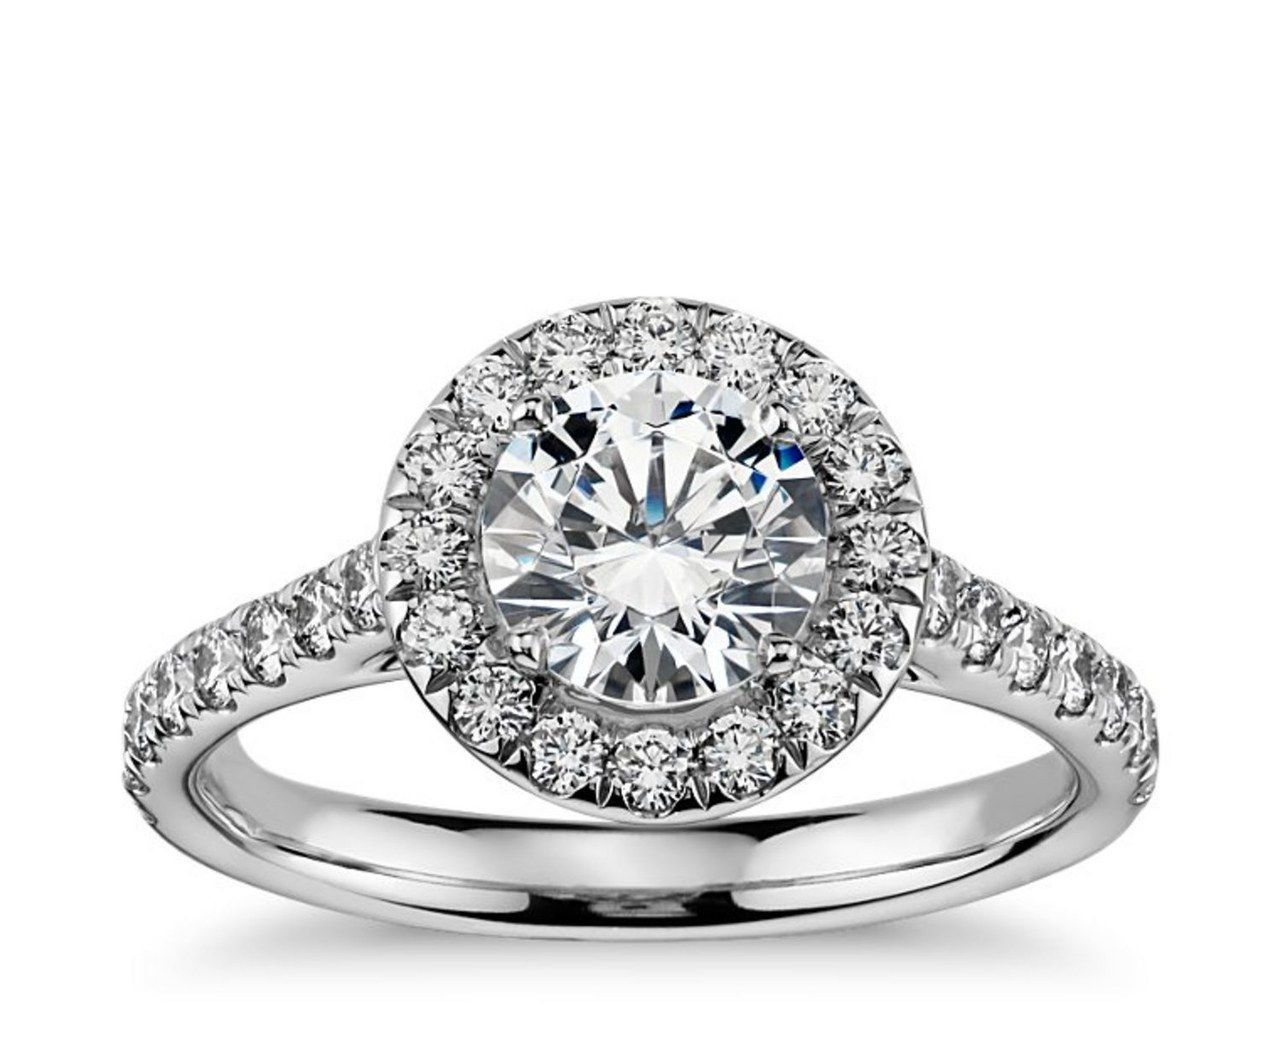 4 most popular blue nile diamond engagement rings 0808